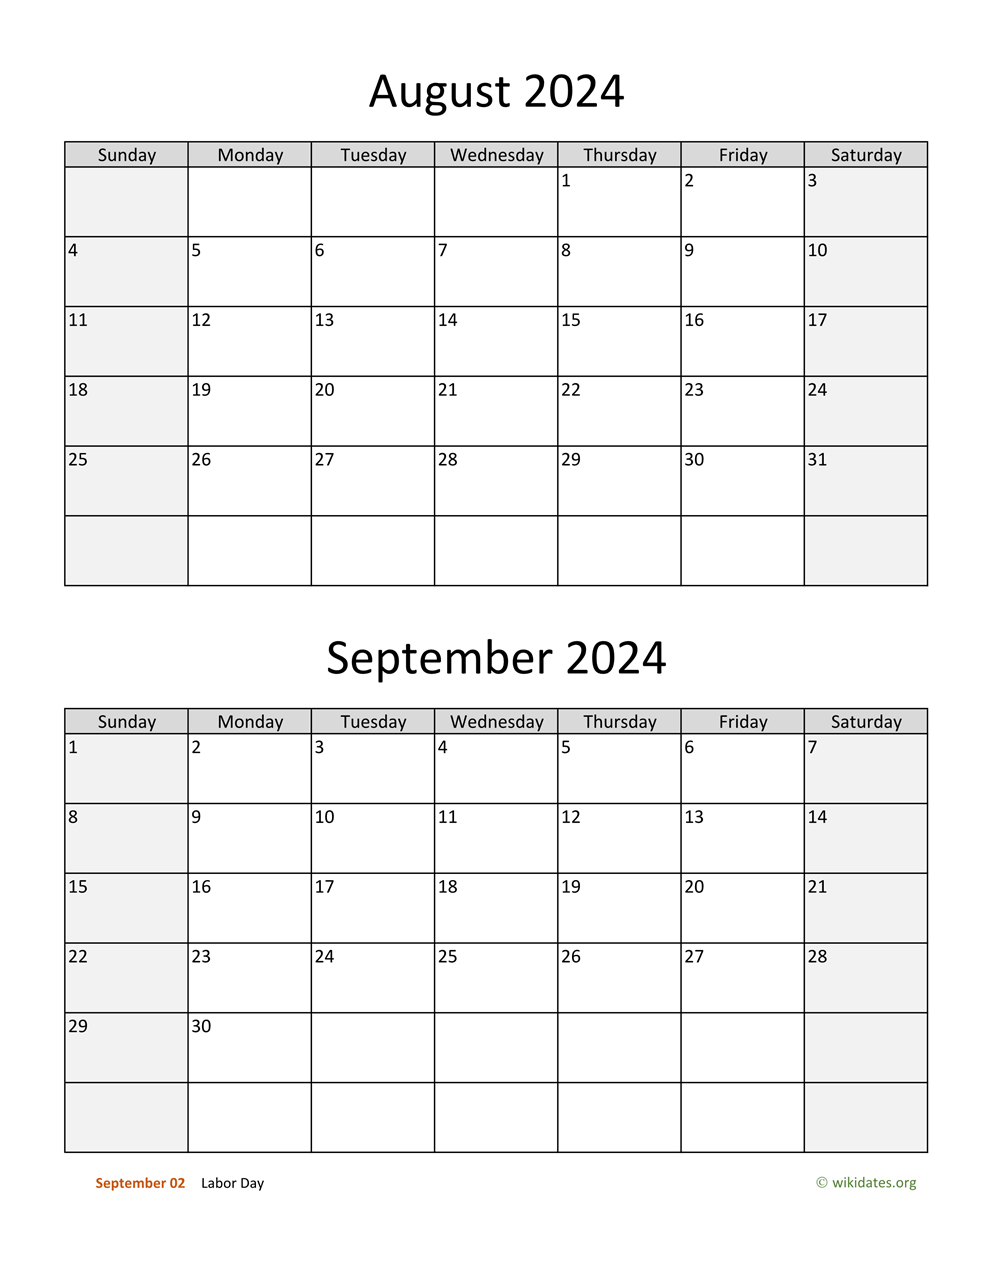 August and September 2024 Calendar | WikiDates.org